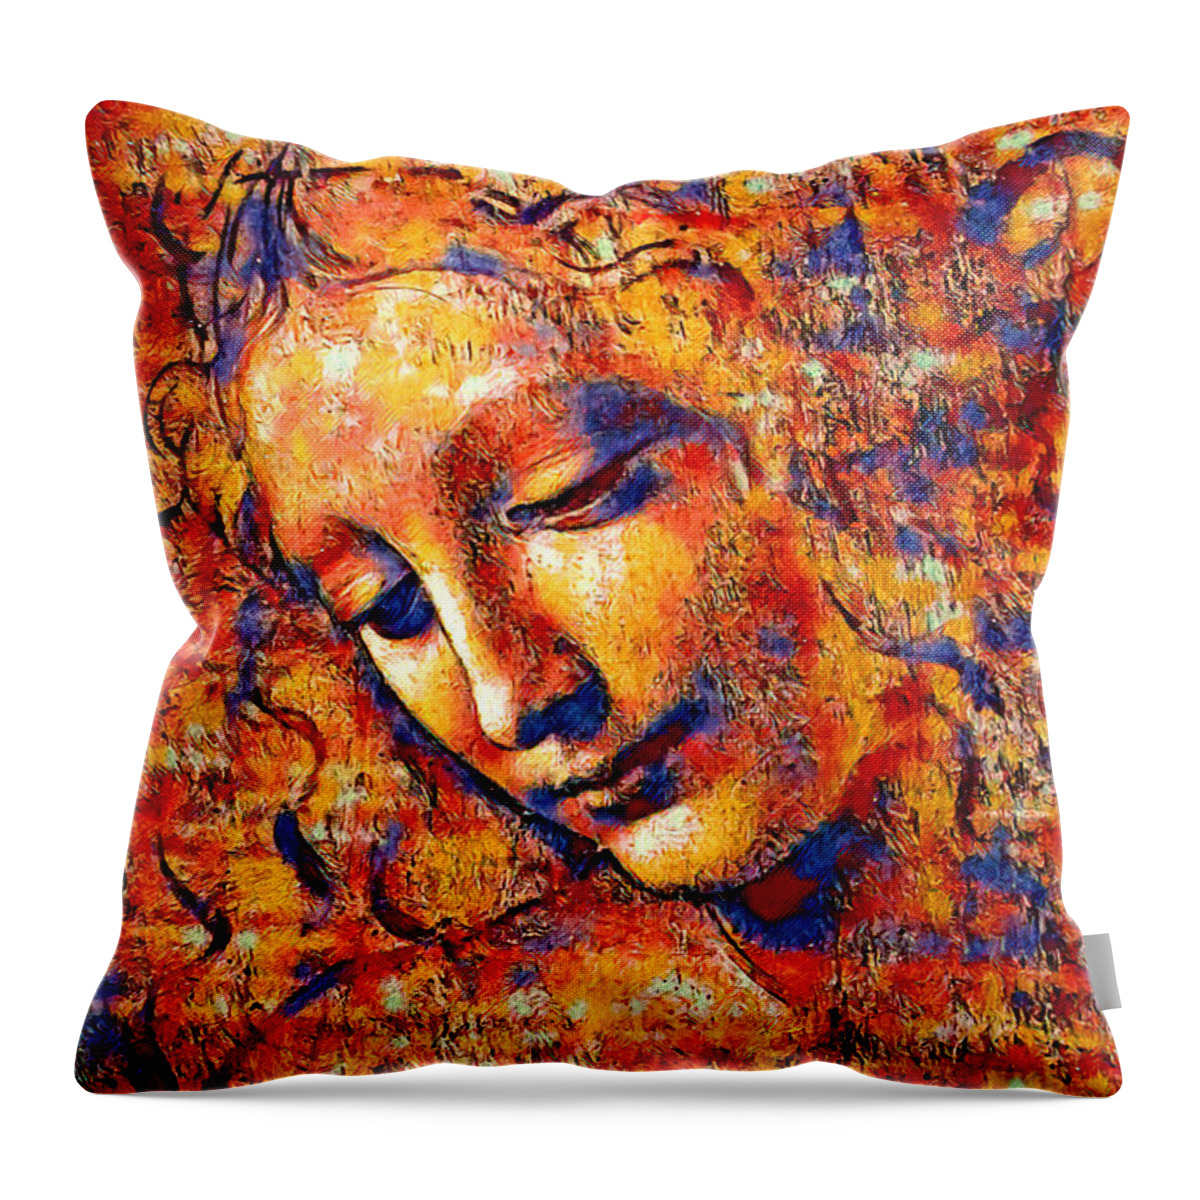 La Scapigliata Throw Pillow featuring the digital art La Scapigliata, 'The Lady with Dishevelled Hair', by Leonardo da Vinci - colorful dark orange by Nicko Prints